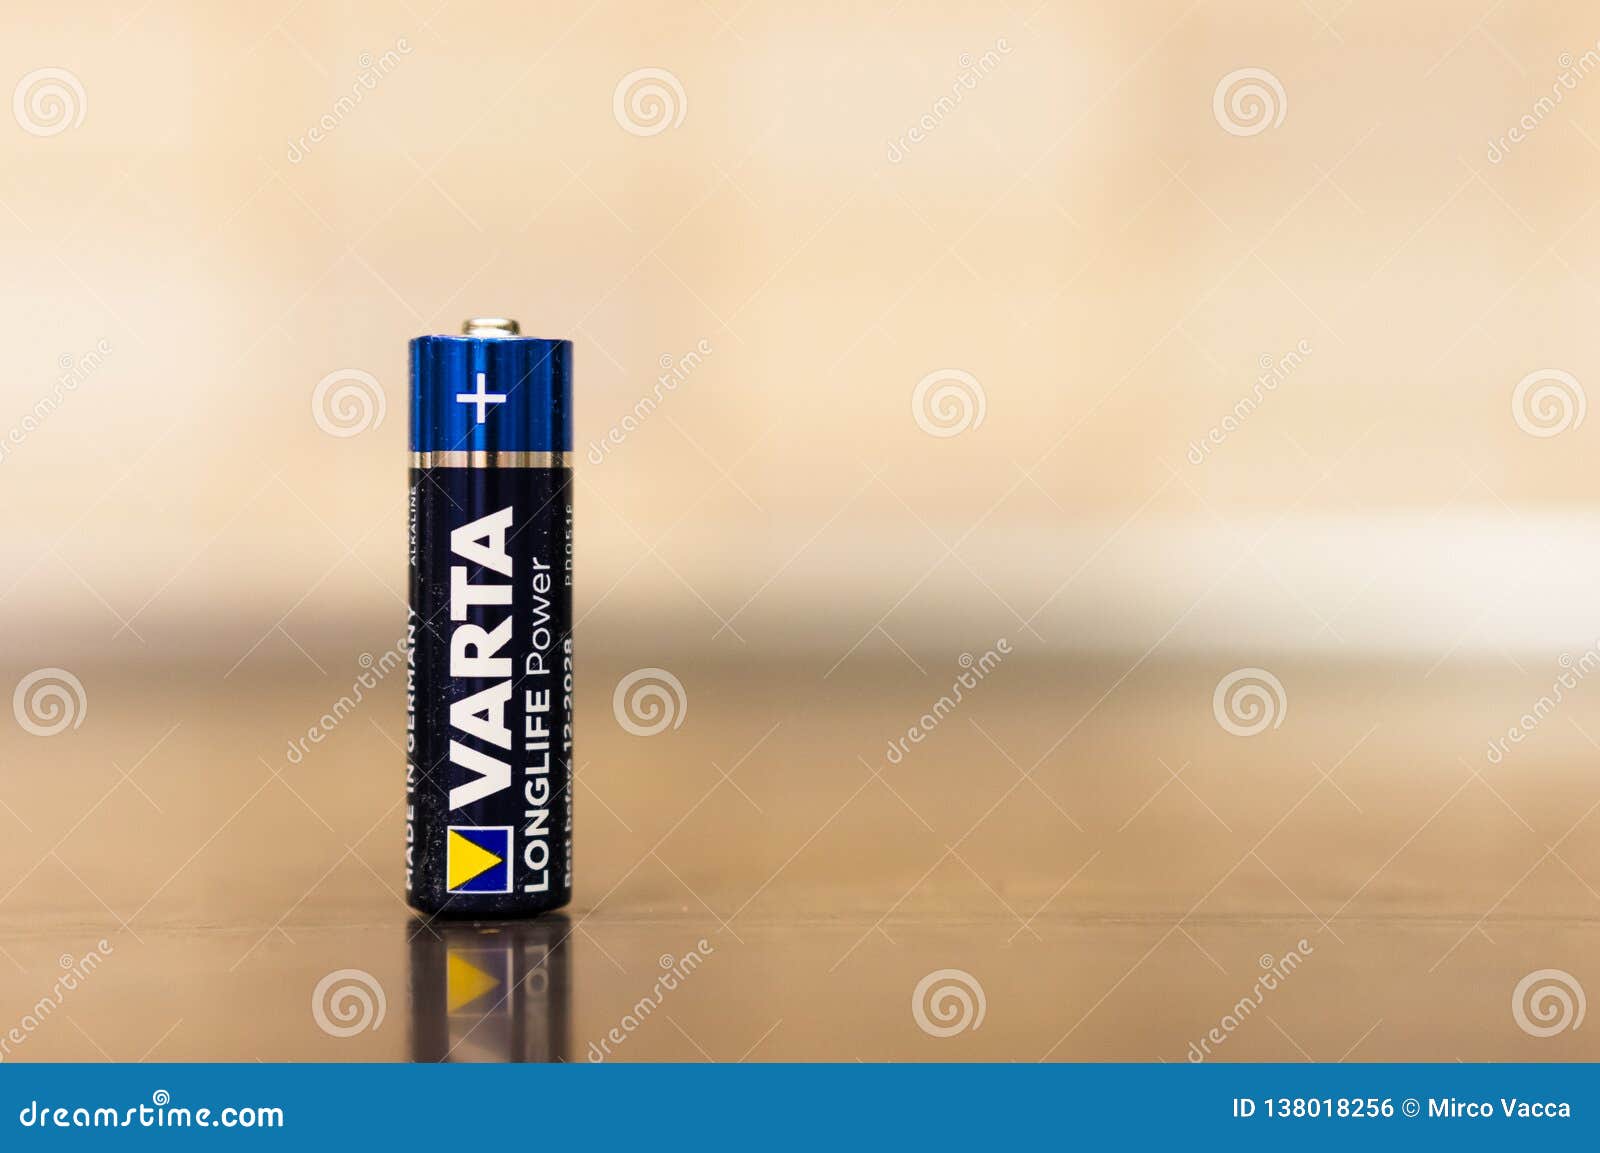 353 Varta Battery Images, Stock Photos, 3D objects, & Vectors